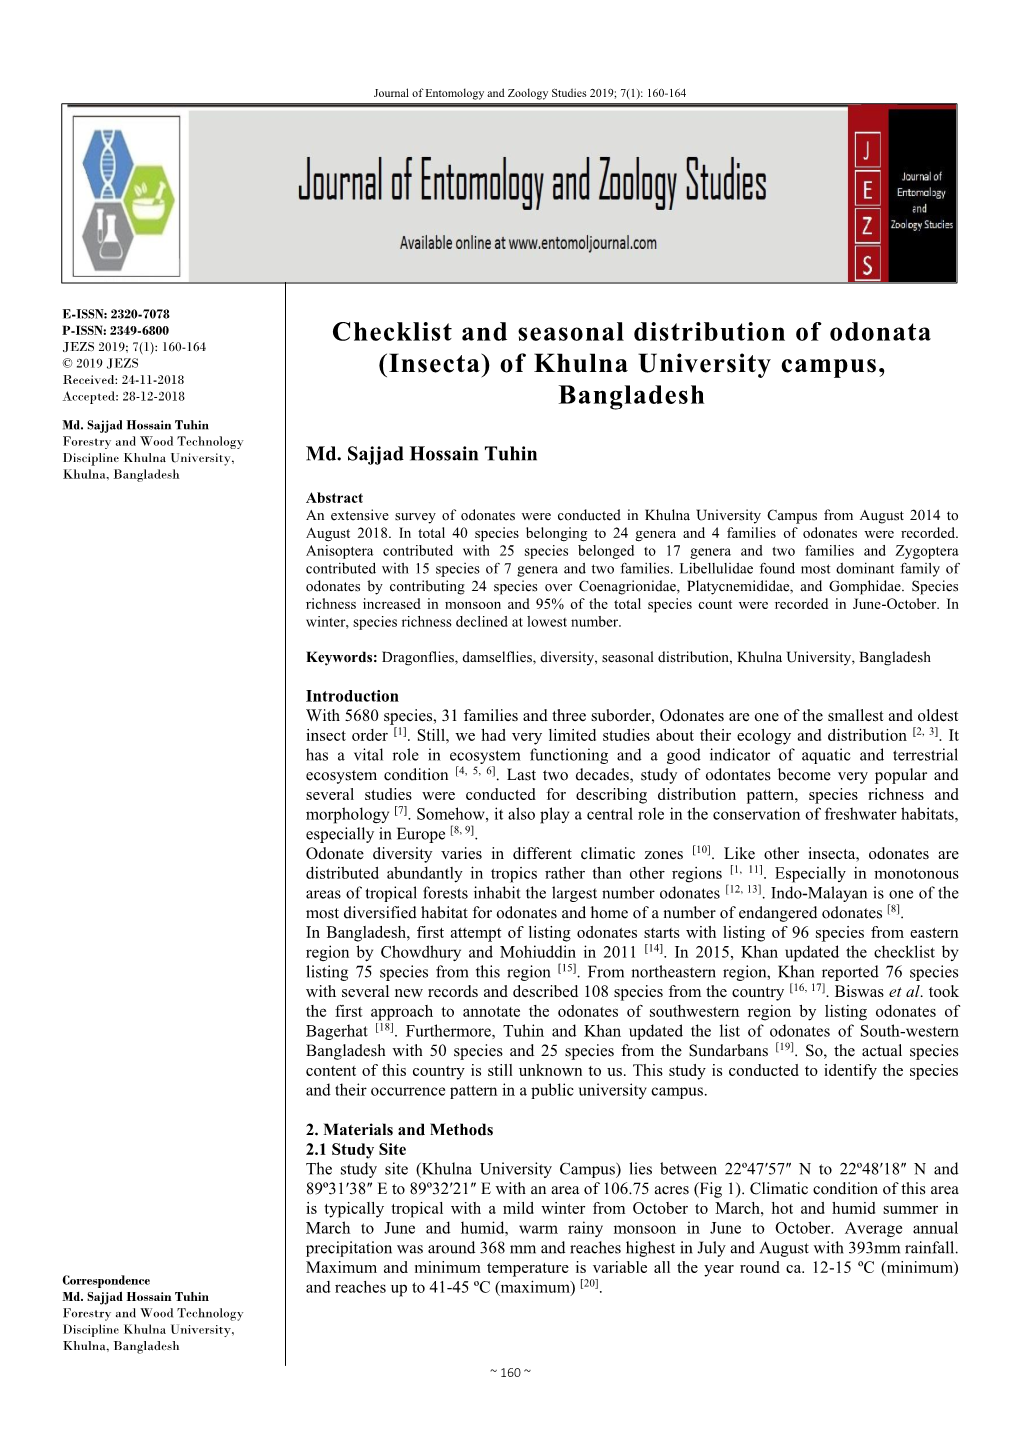 Checklist and Seasonal Distribution of Odonata